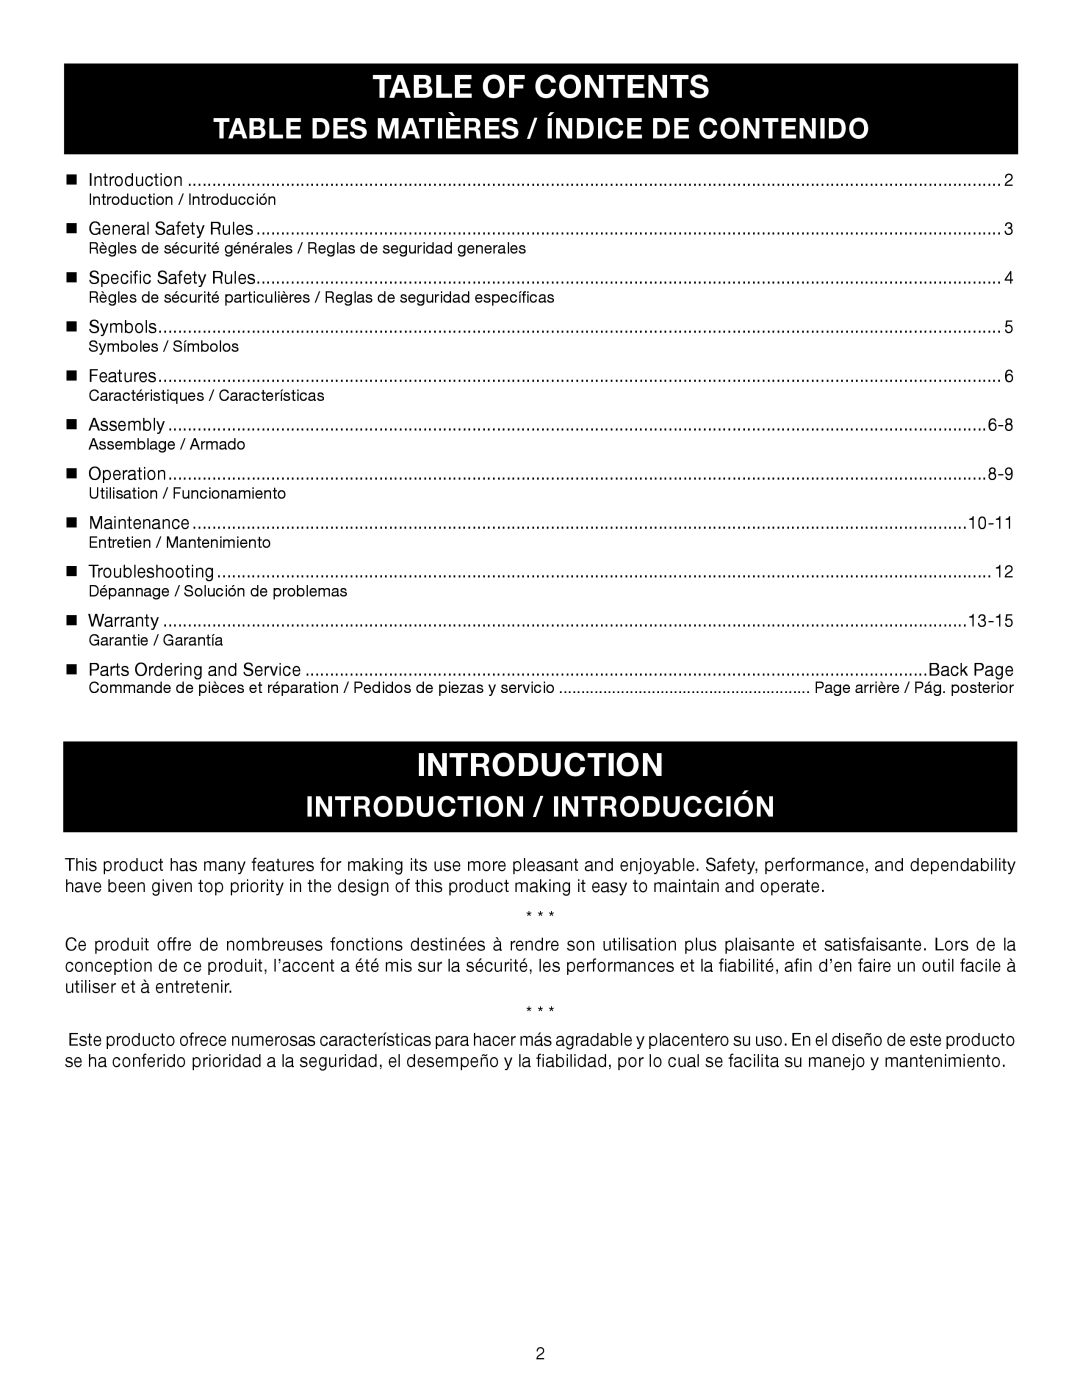 Ryobi CS26 RY28020 Table Of Contents, Table Des Matières / Índice De Contenido, Introduction / Introducción 